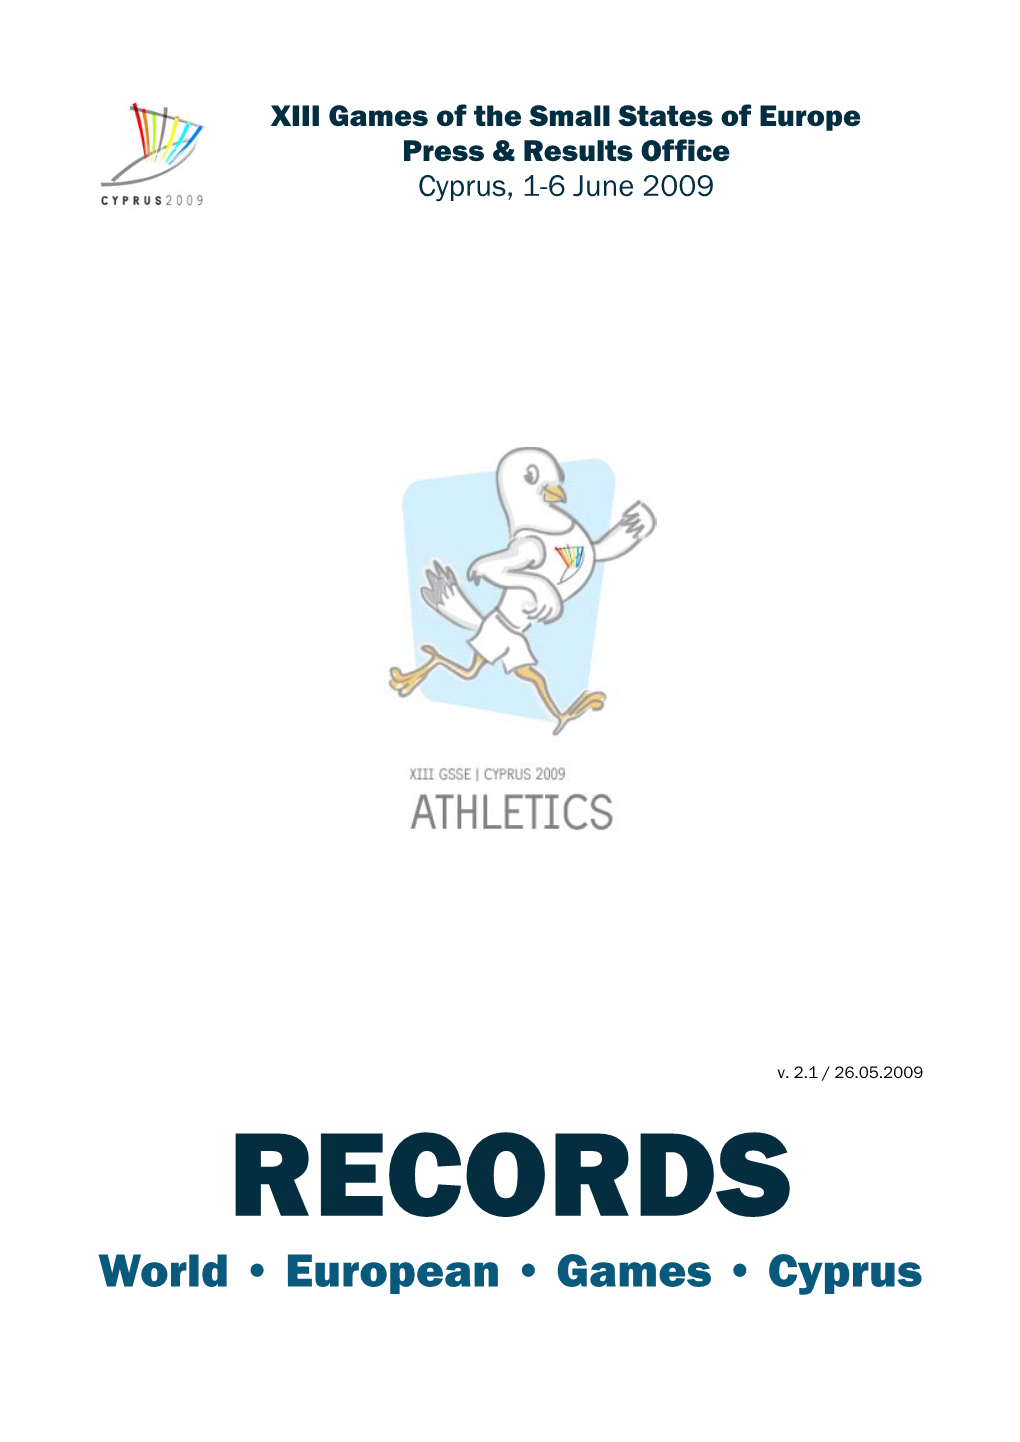 Athletics: World, European, Games & Cyprus Records